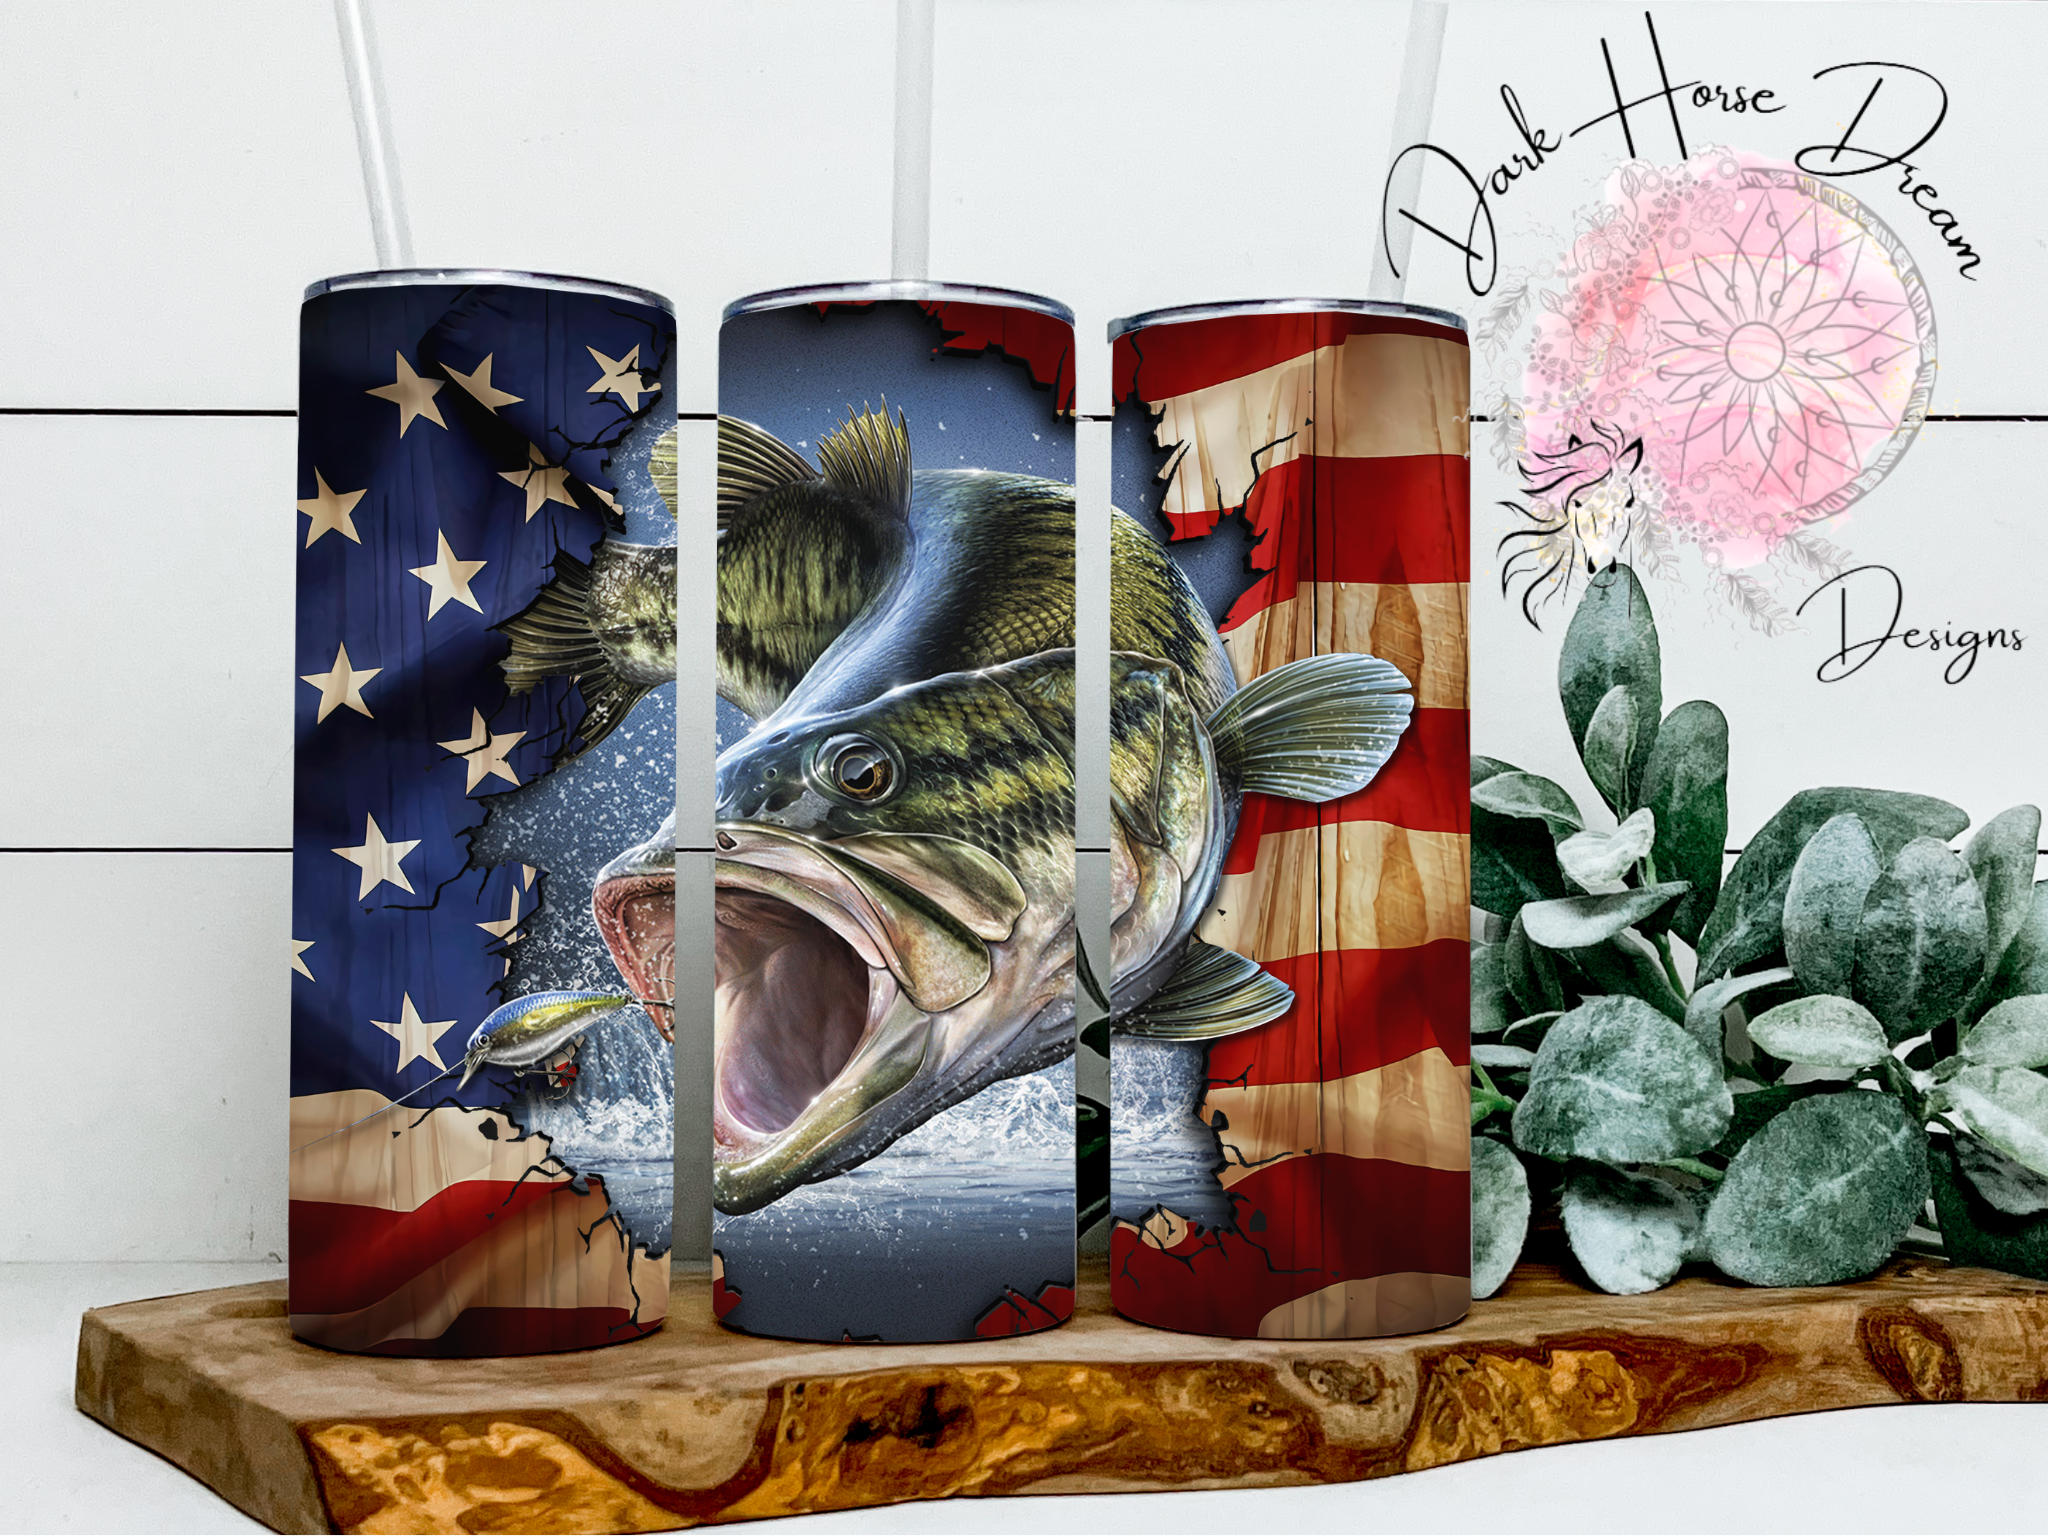 American Bass Fish – Dark Horse Dream Designs LLC